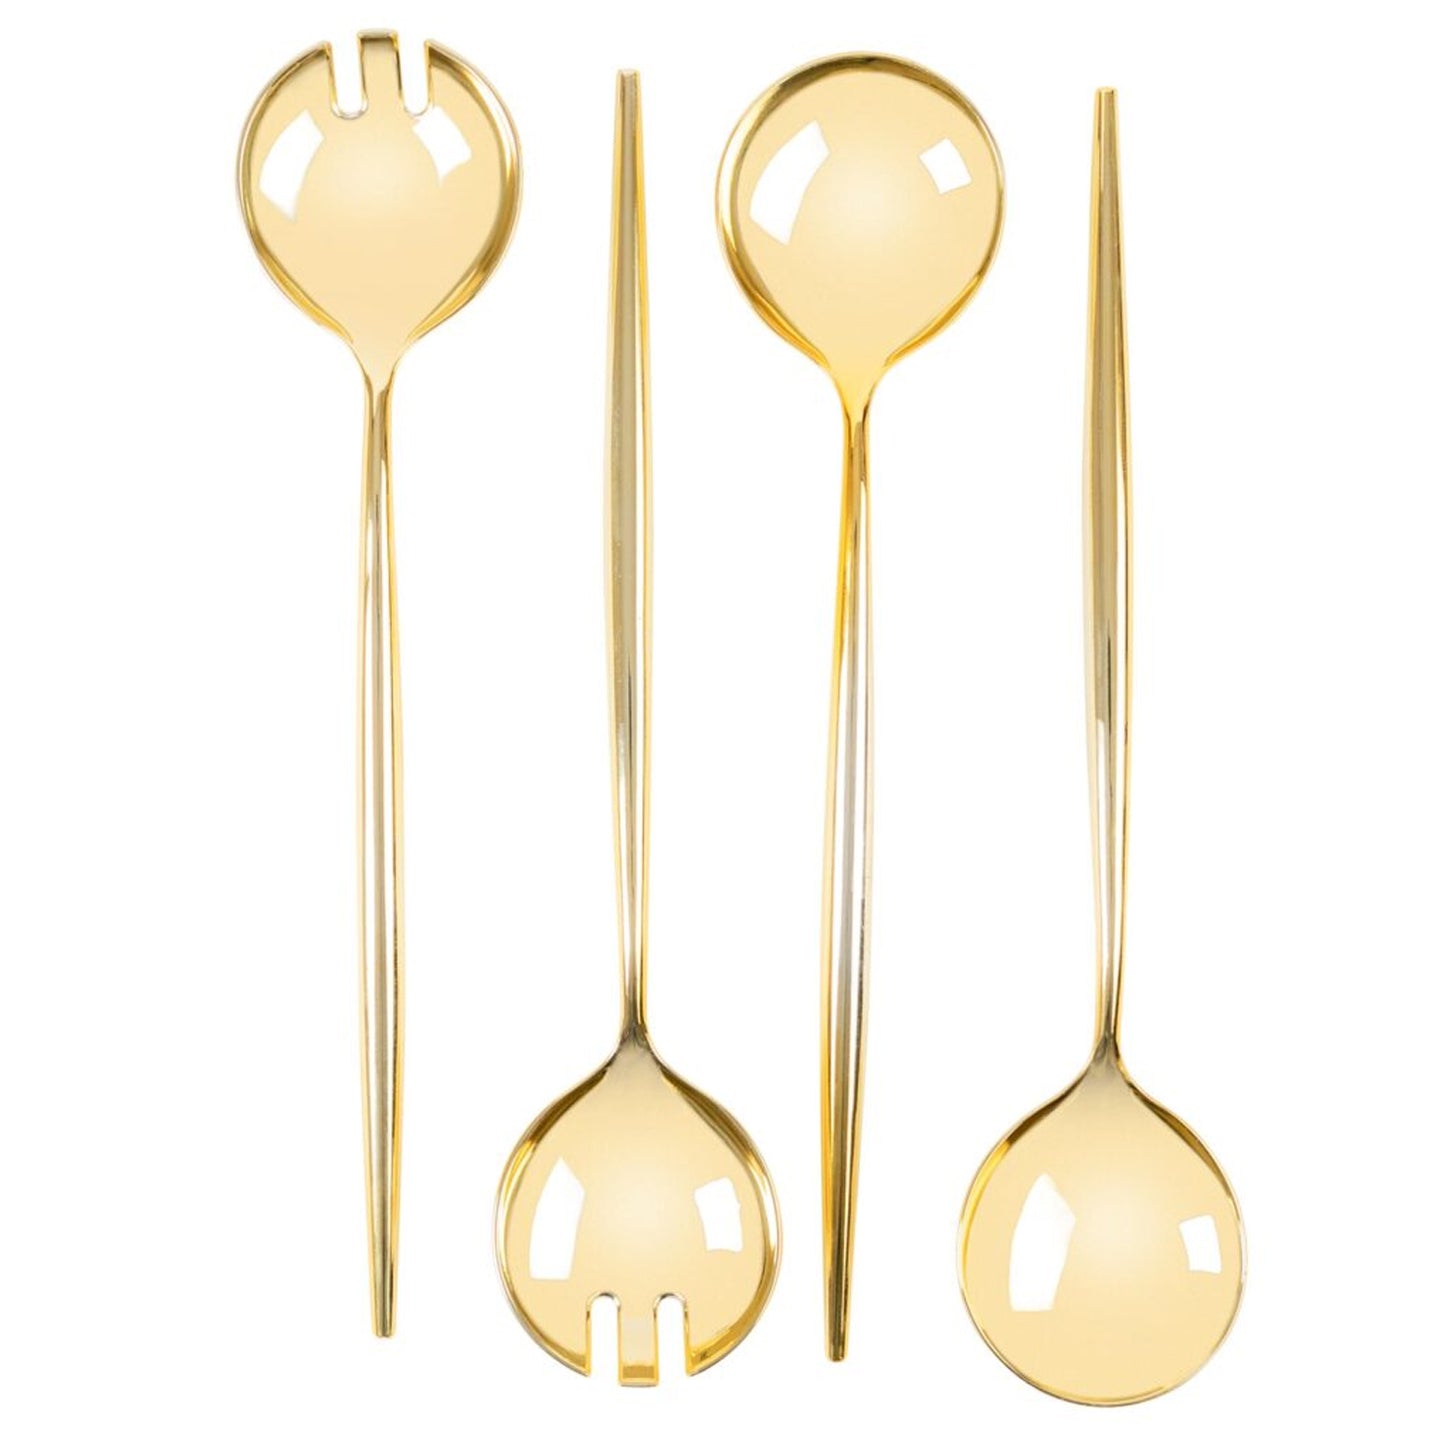 Novelty Serving Plastic Flatware Spoon & Spork Gold 13" Tablesettings Blue Sky   